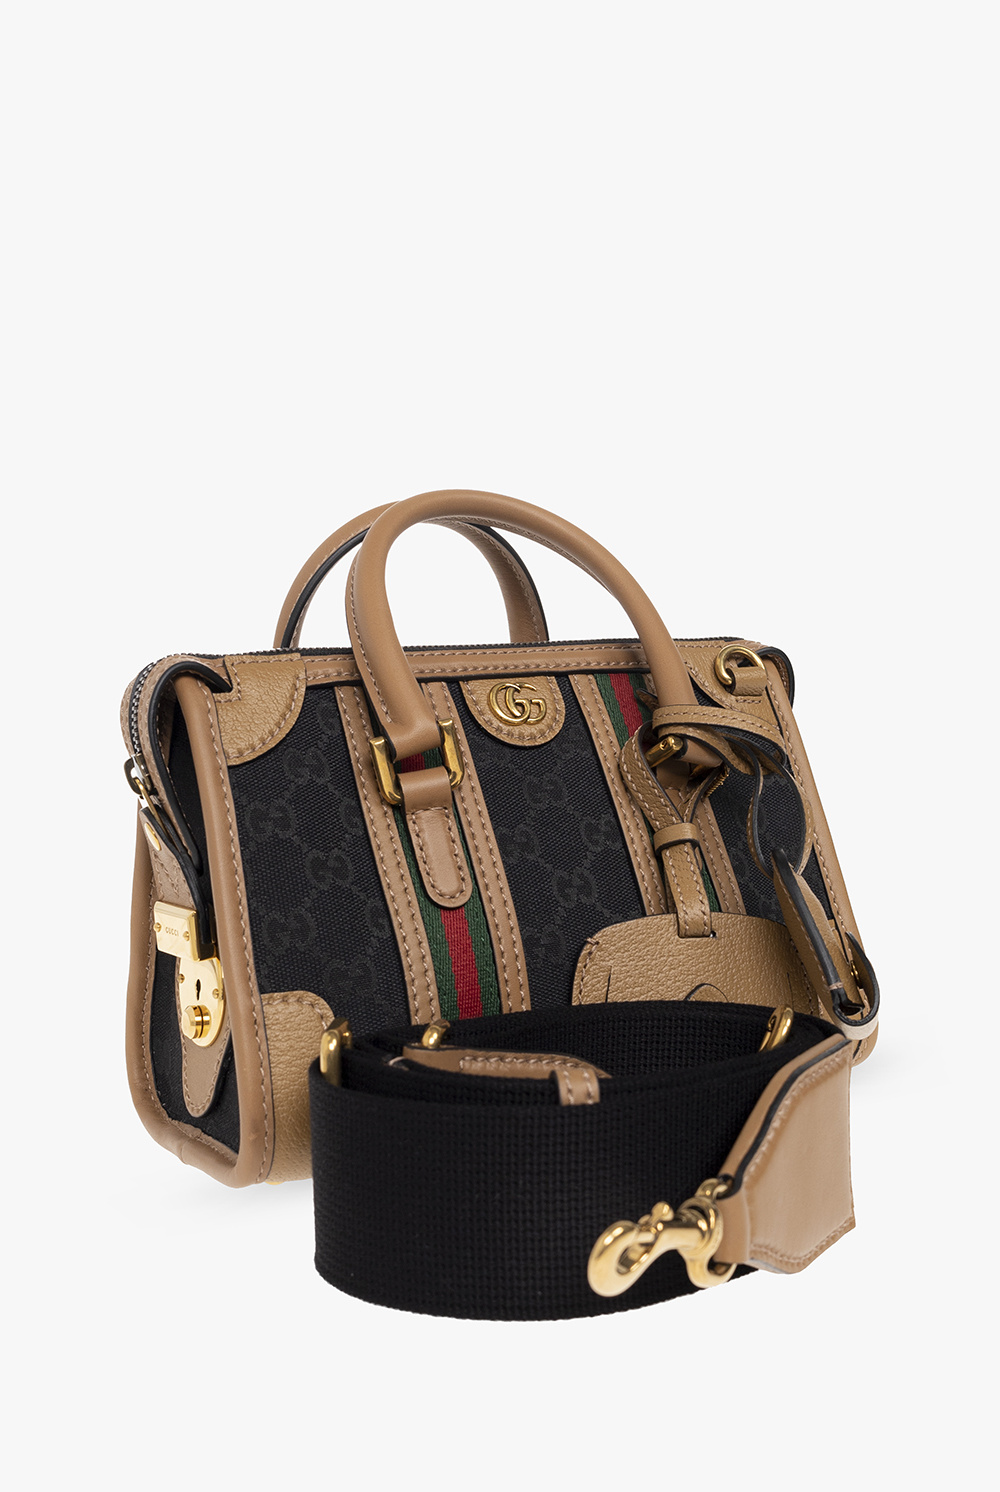 Copy Luxury Brand Designer Gucc'i's Bags. Shoulder Bags Lv's